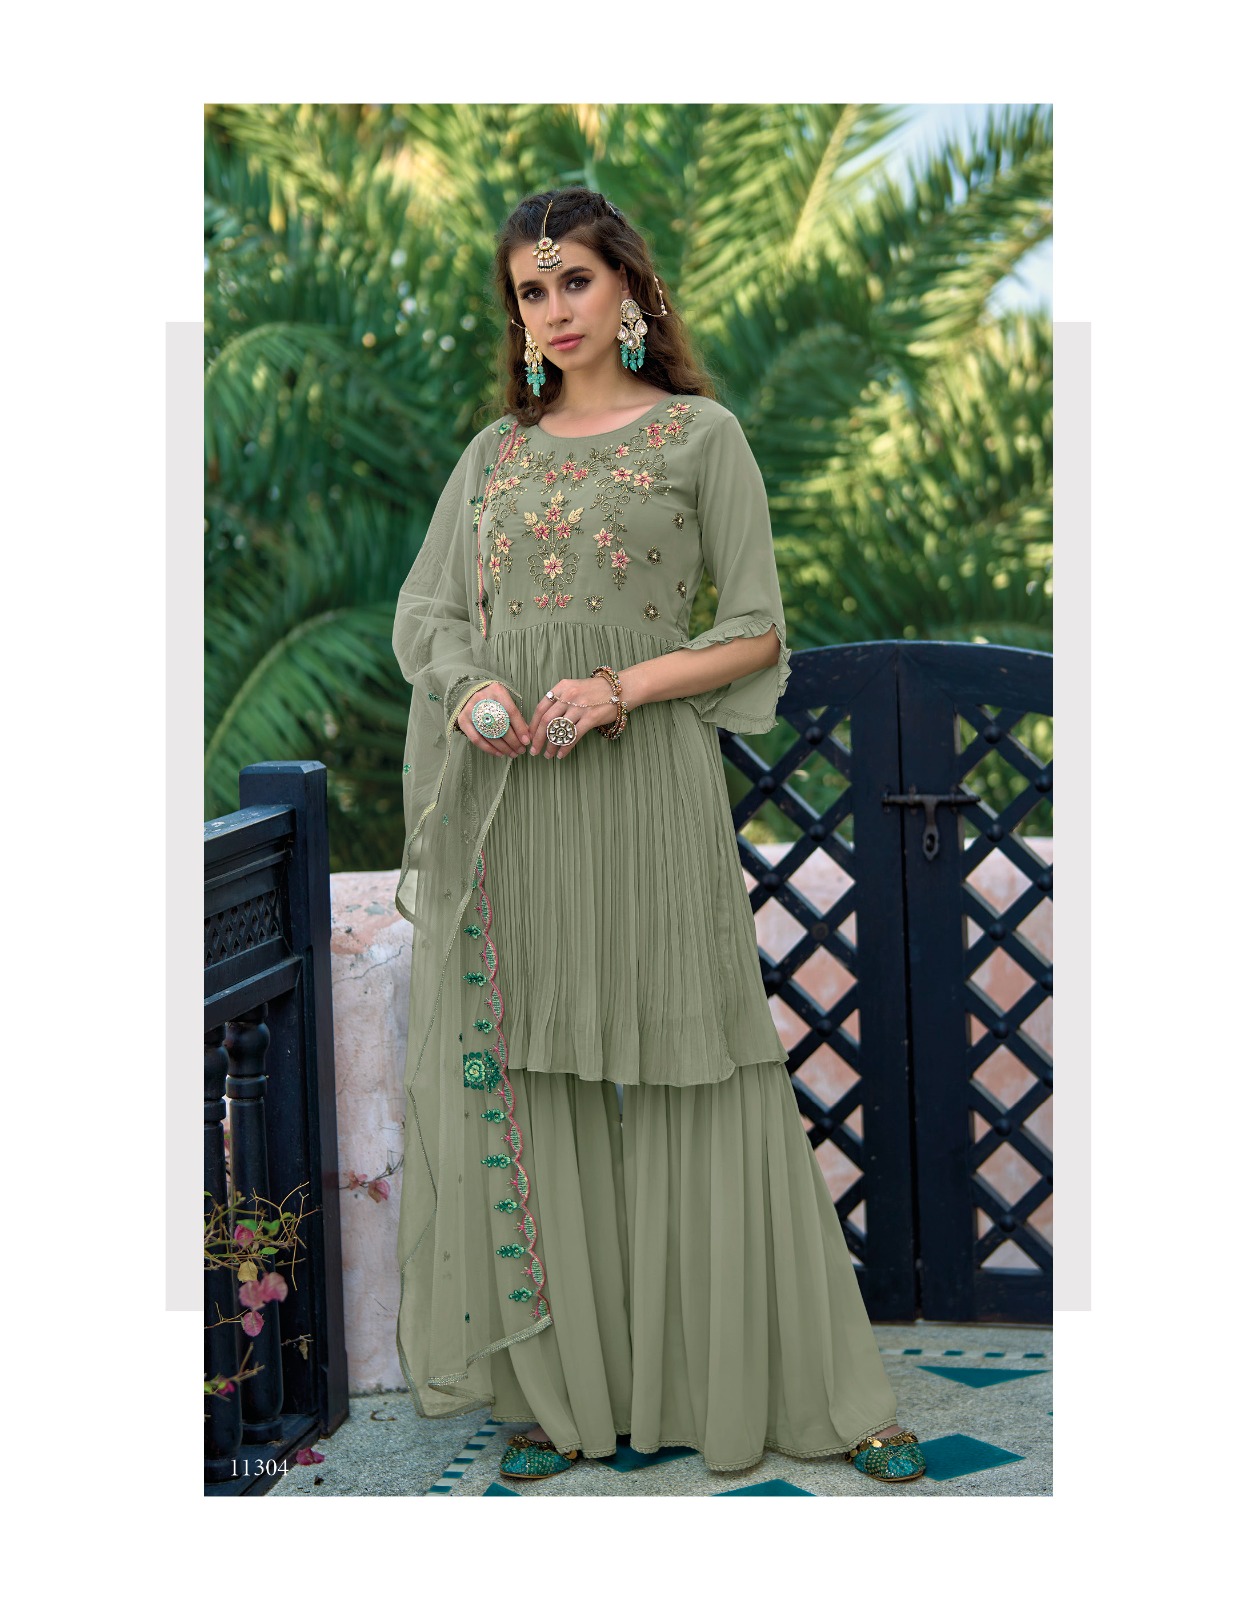 Mehrama Lily Lali Readymade Sharara Suits Manufacturer Wholesaler